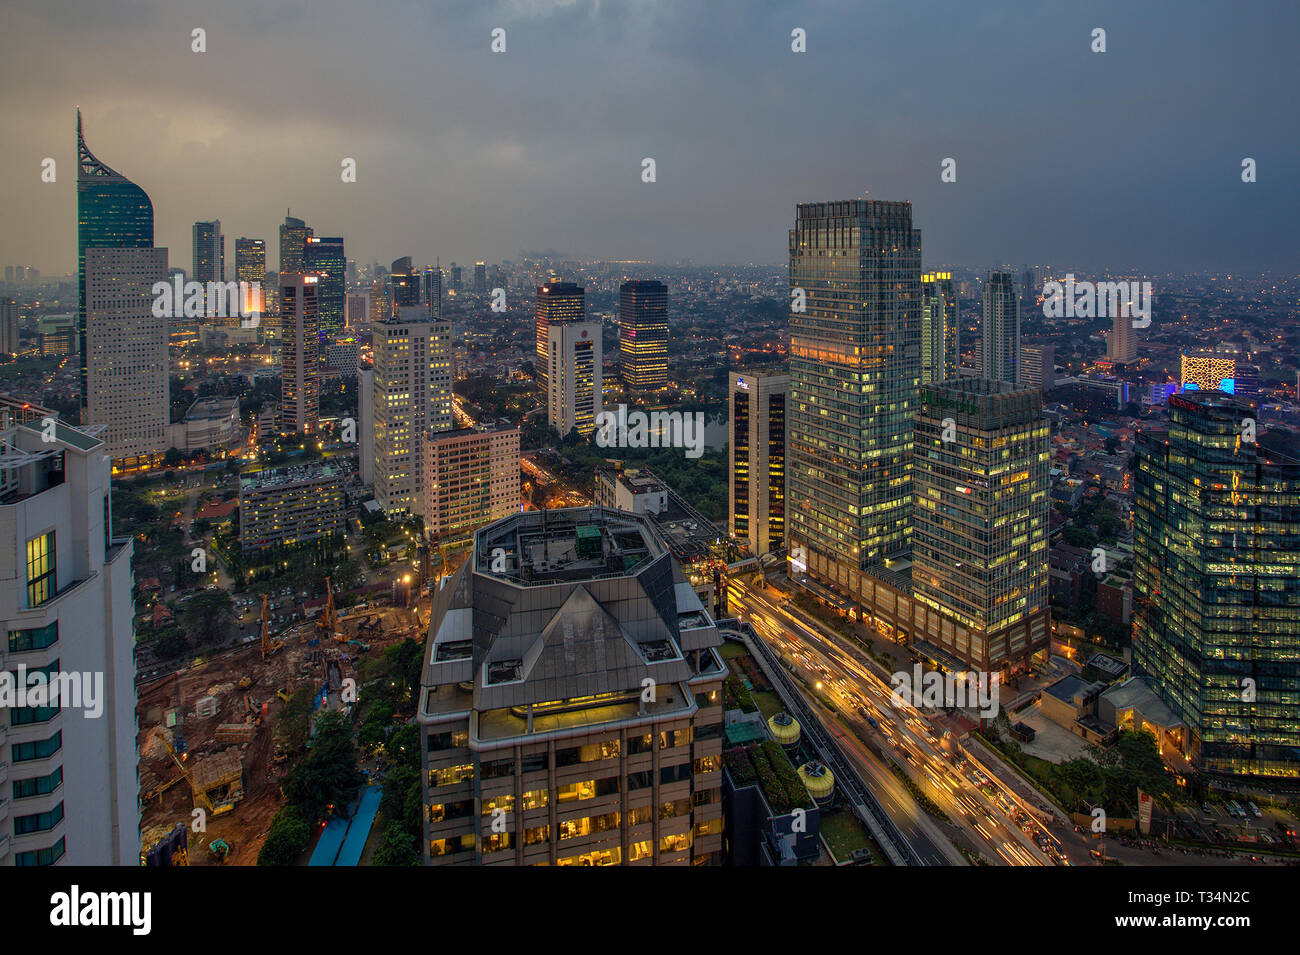 Cityscape at night, Jakarta, Indonesia Stock Photo